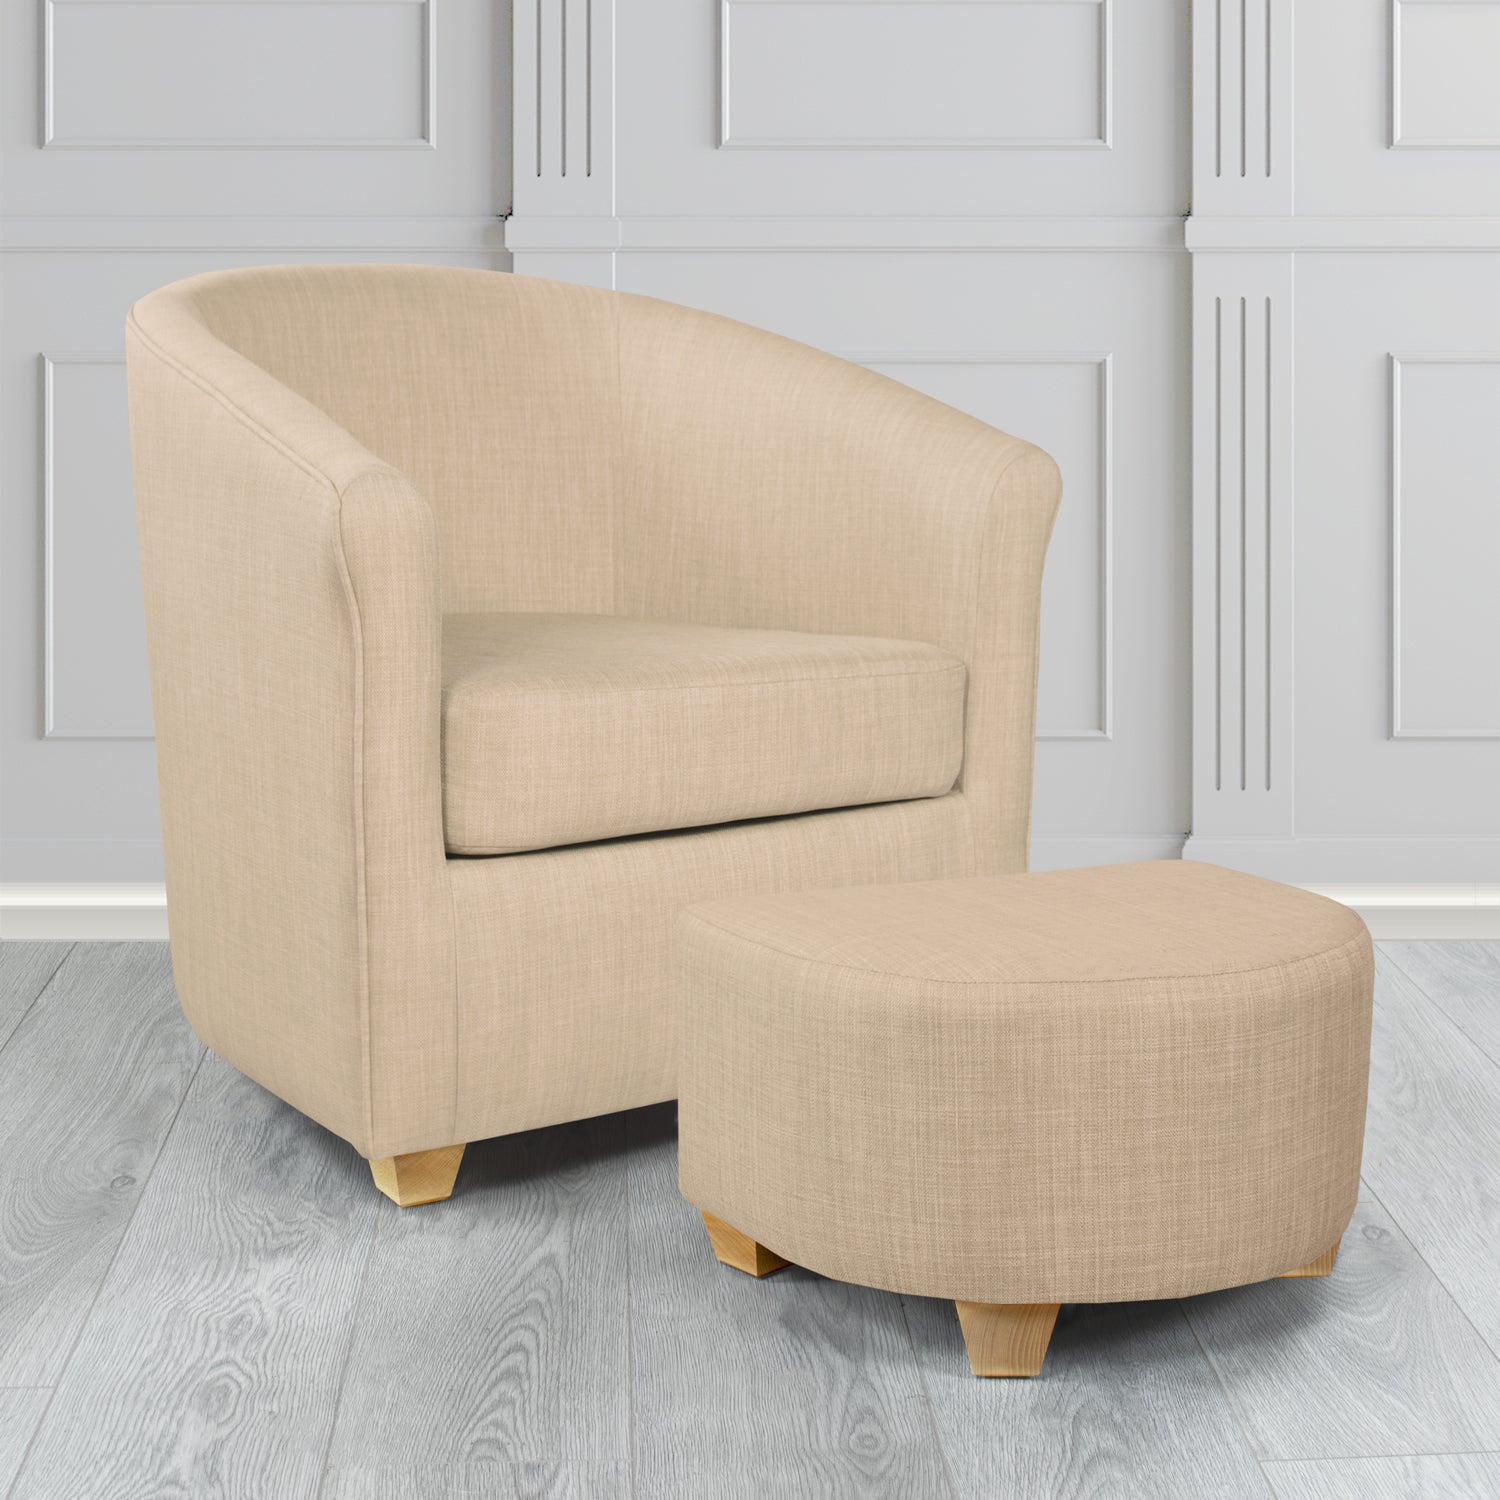 Cannes Charles Sand Plain Linen Fabric Tub Chair & Footstool Set - The Tub Chair Shop